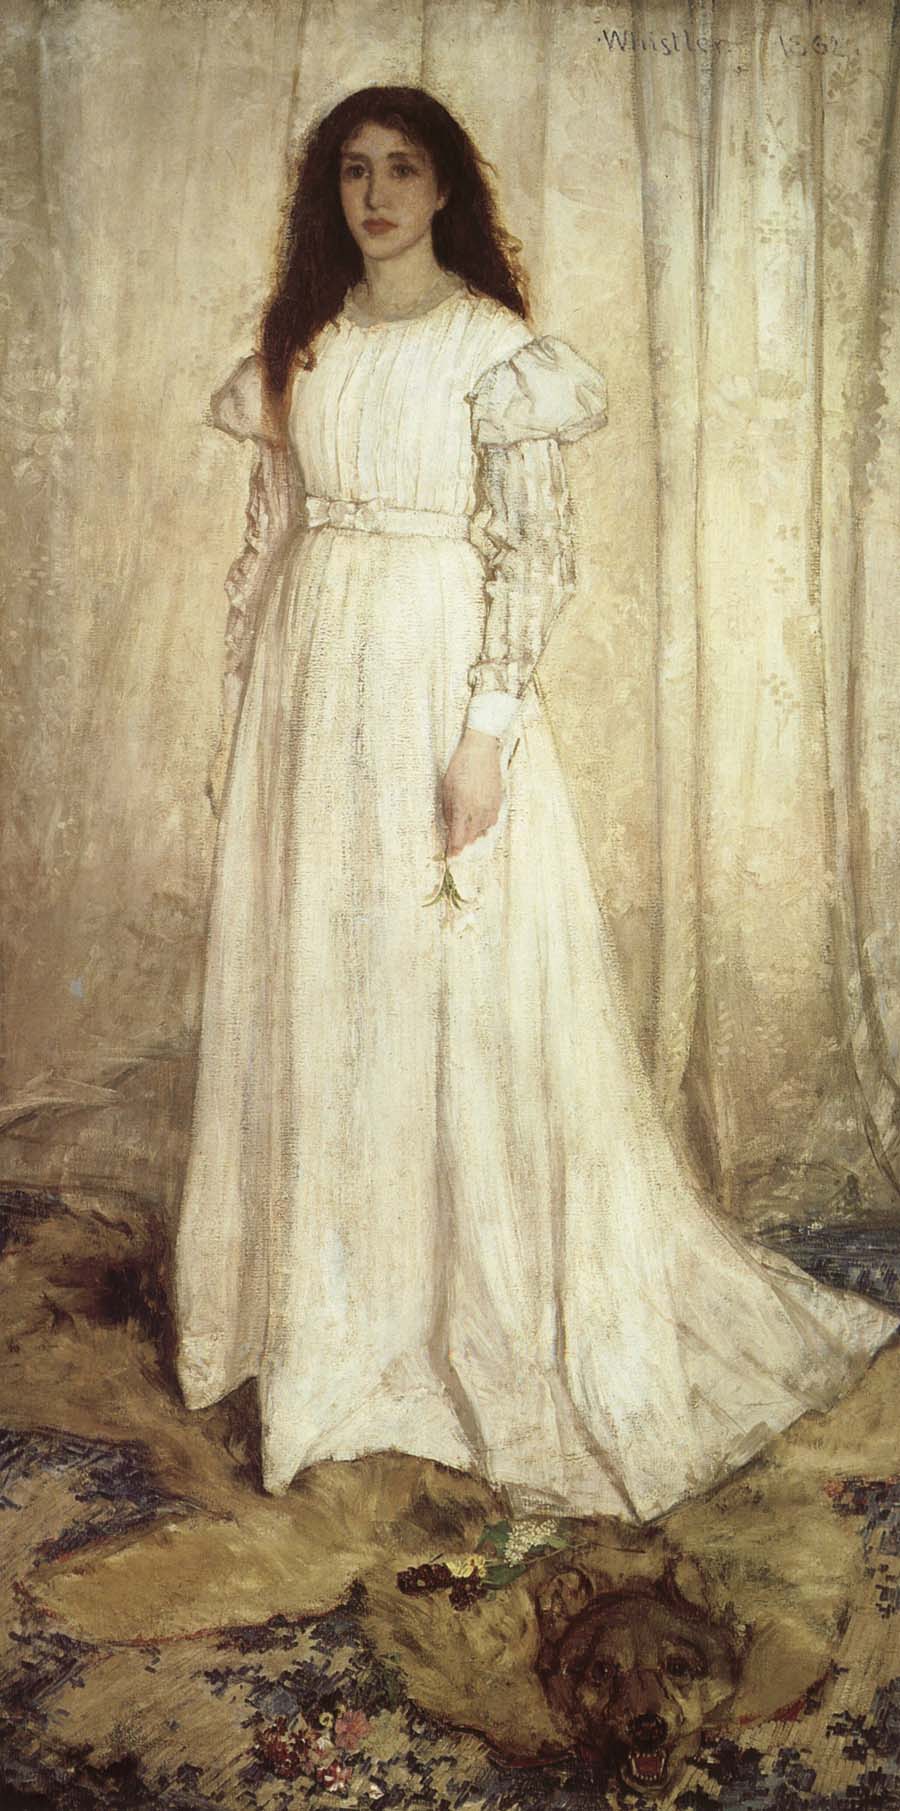 James Mcneill Whistler The girl in white